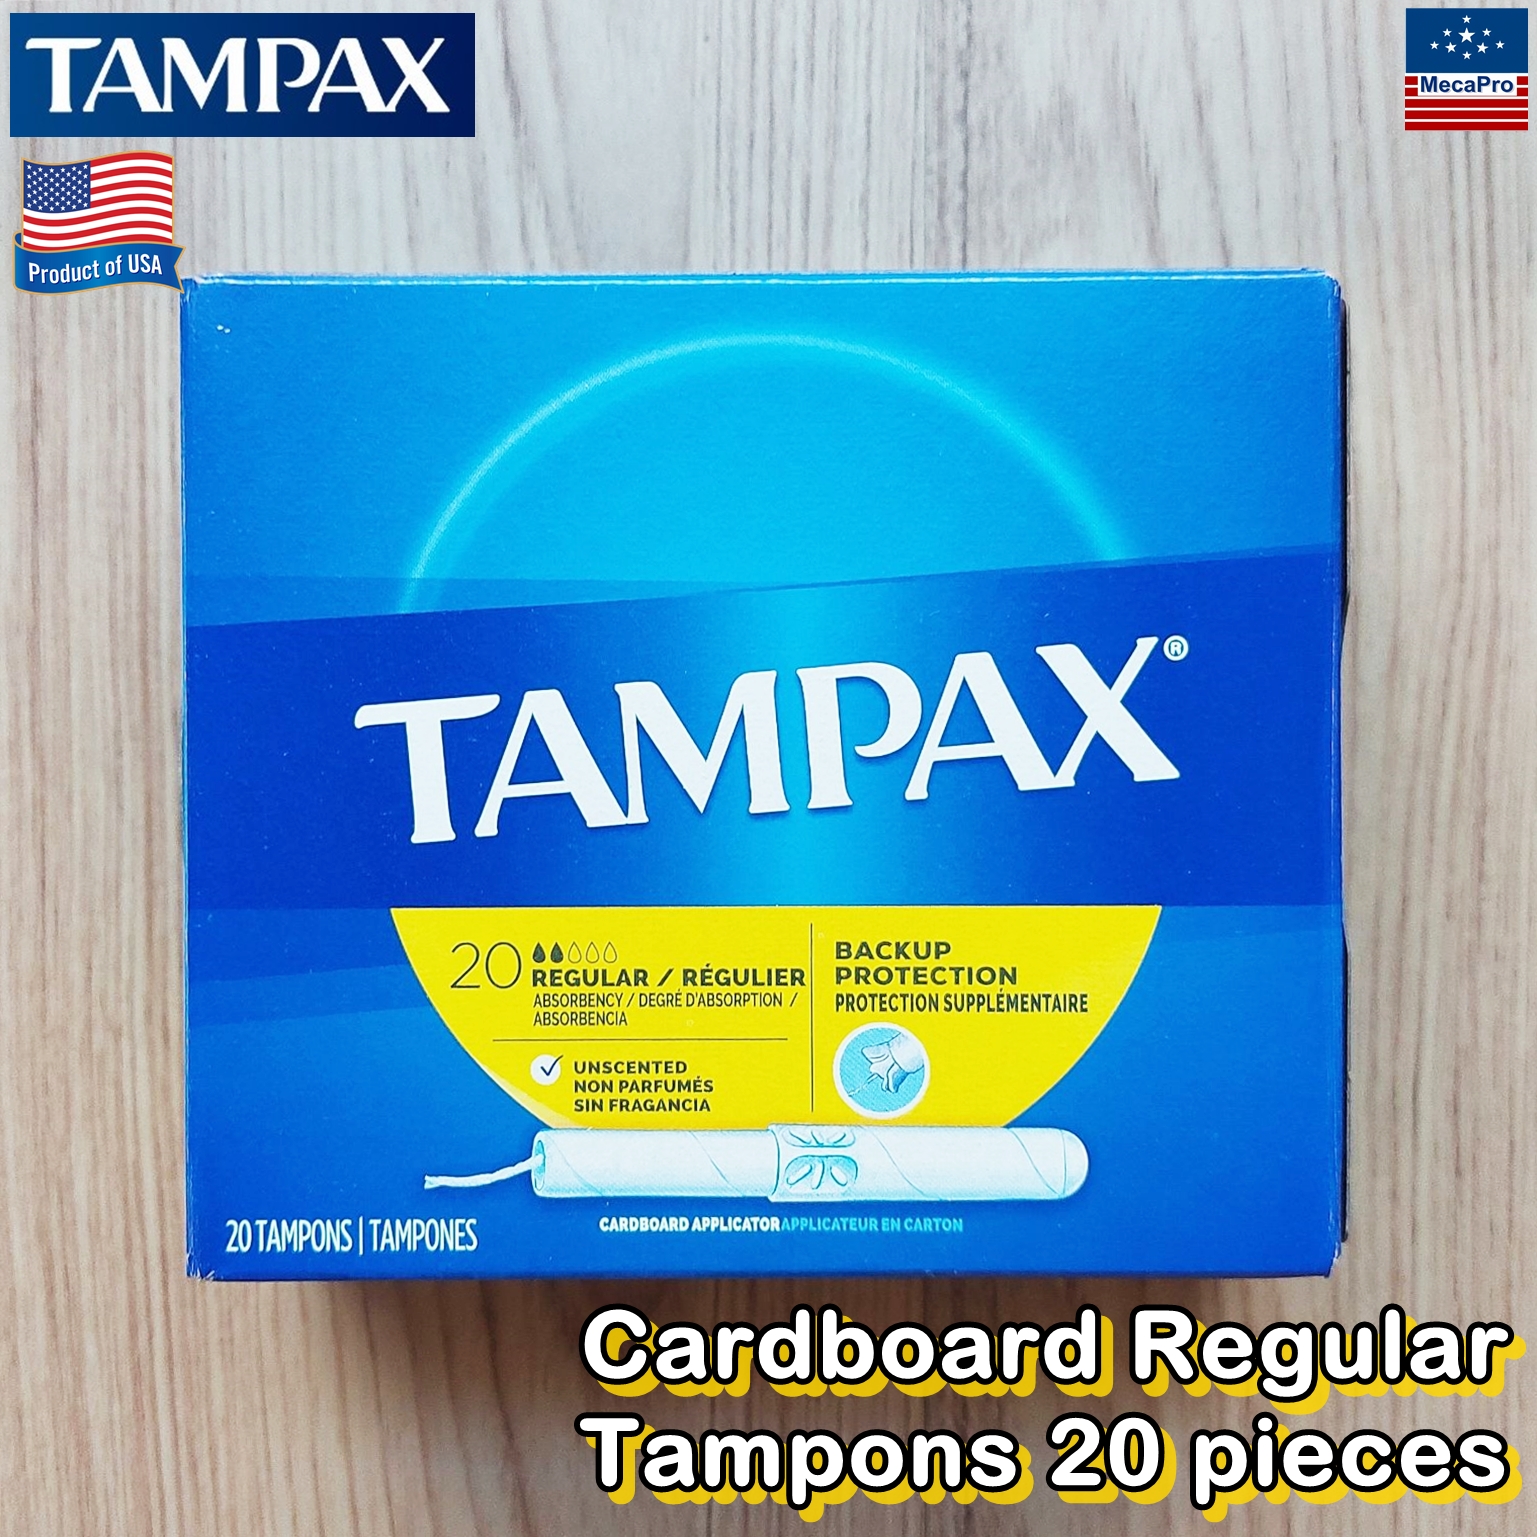 Tampax® Cardboard Regular Tampons 20 Pieces ผ้าอนามัยแบบสอด 20 ชิ้น เหมาะกับวันมาปกติ